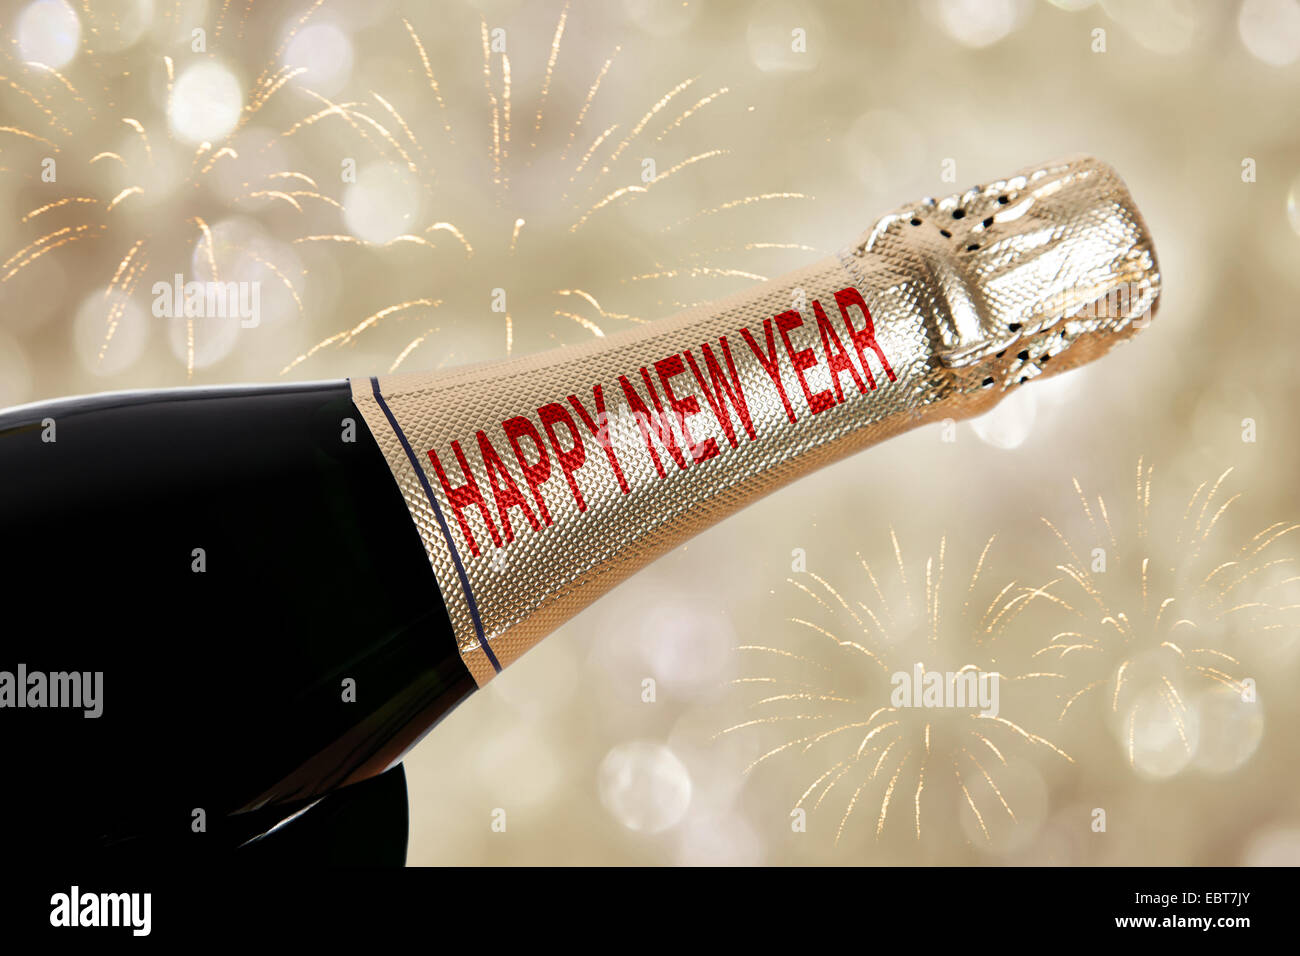 Happy New Year written on champagne bottle Stock Photo